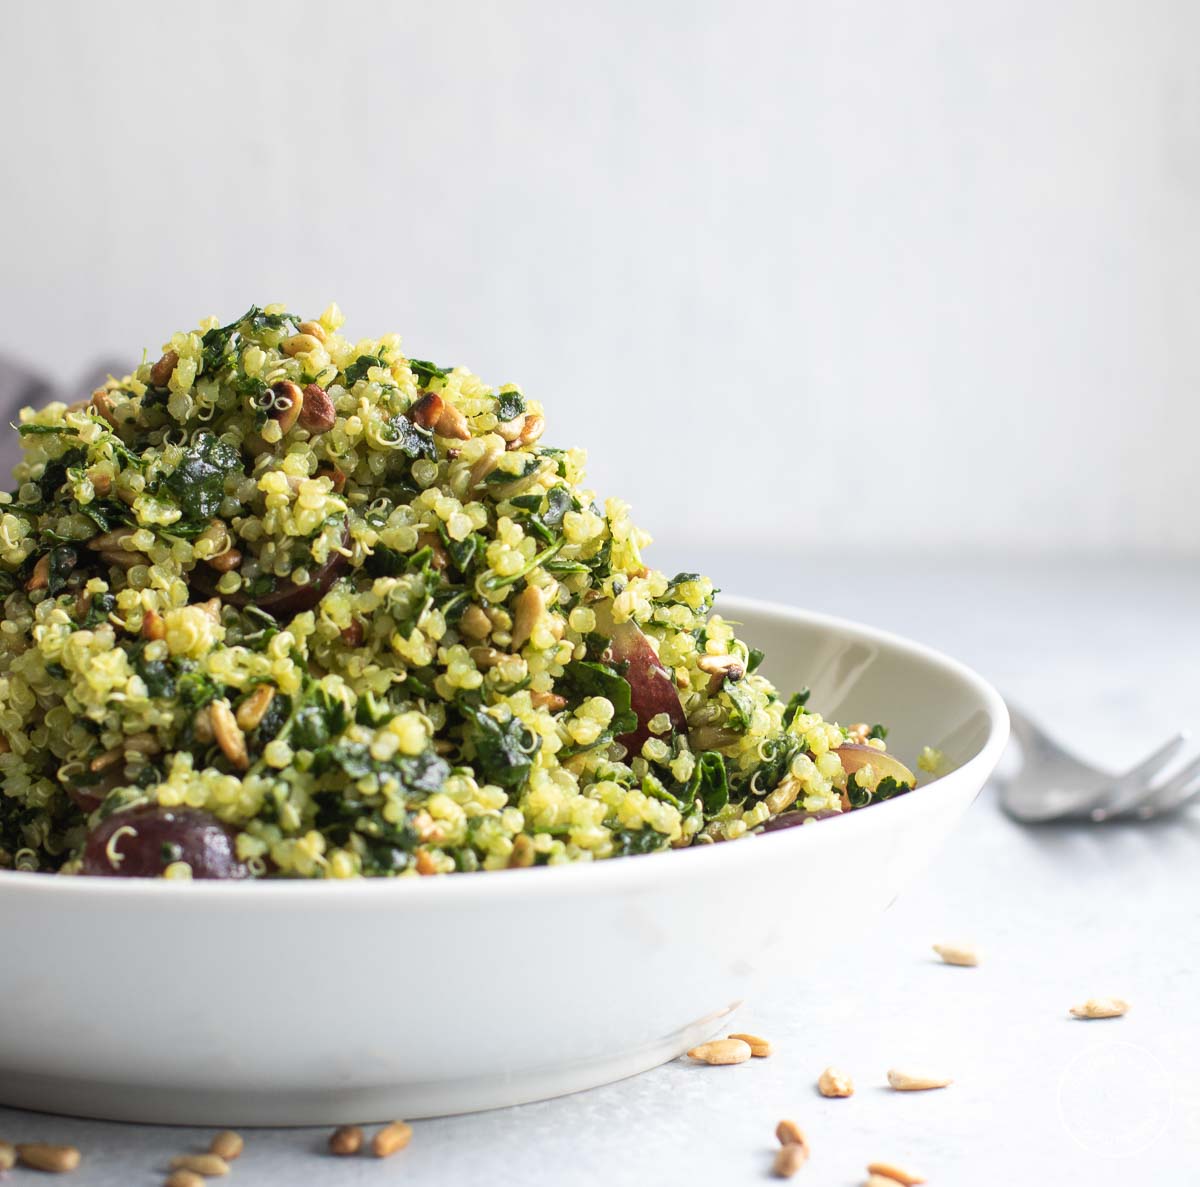 Kale and Quinoa Salad with Apple Cider Vinaigrette - Marisa Moore Nutrition